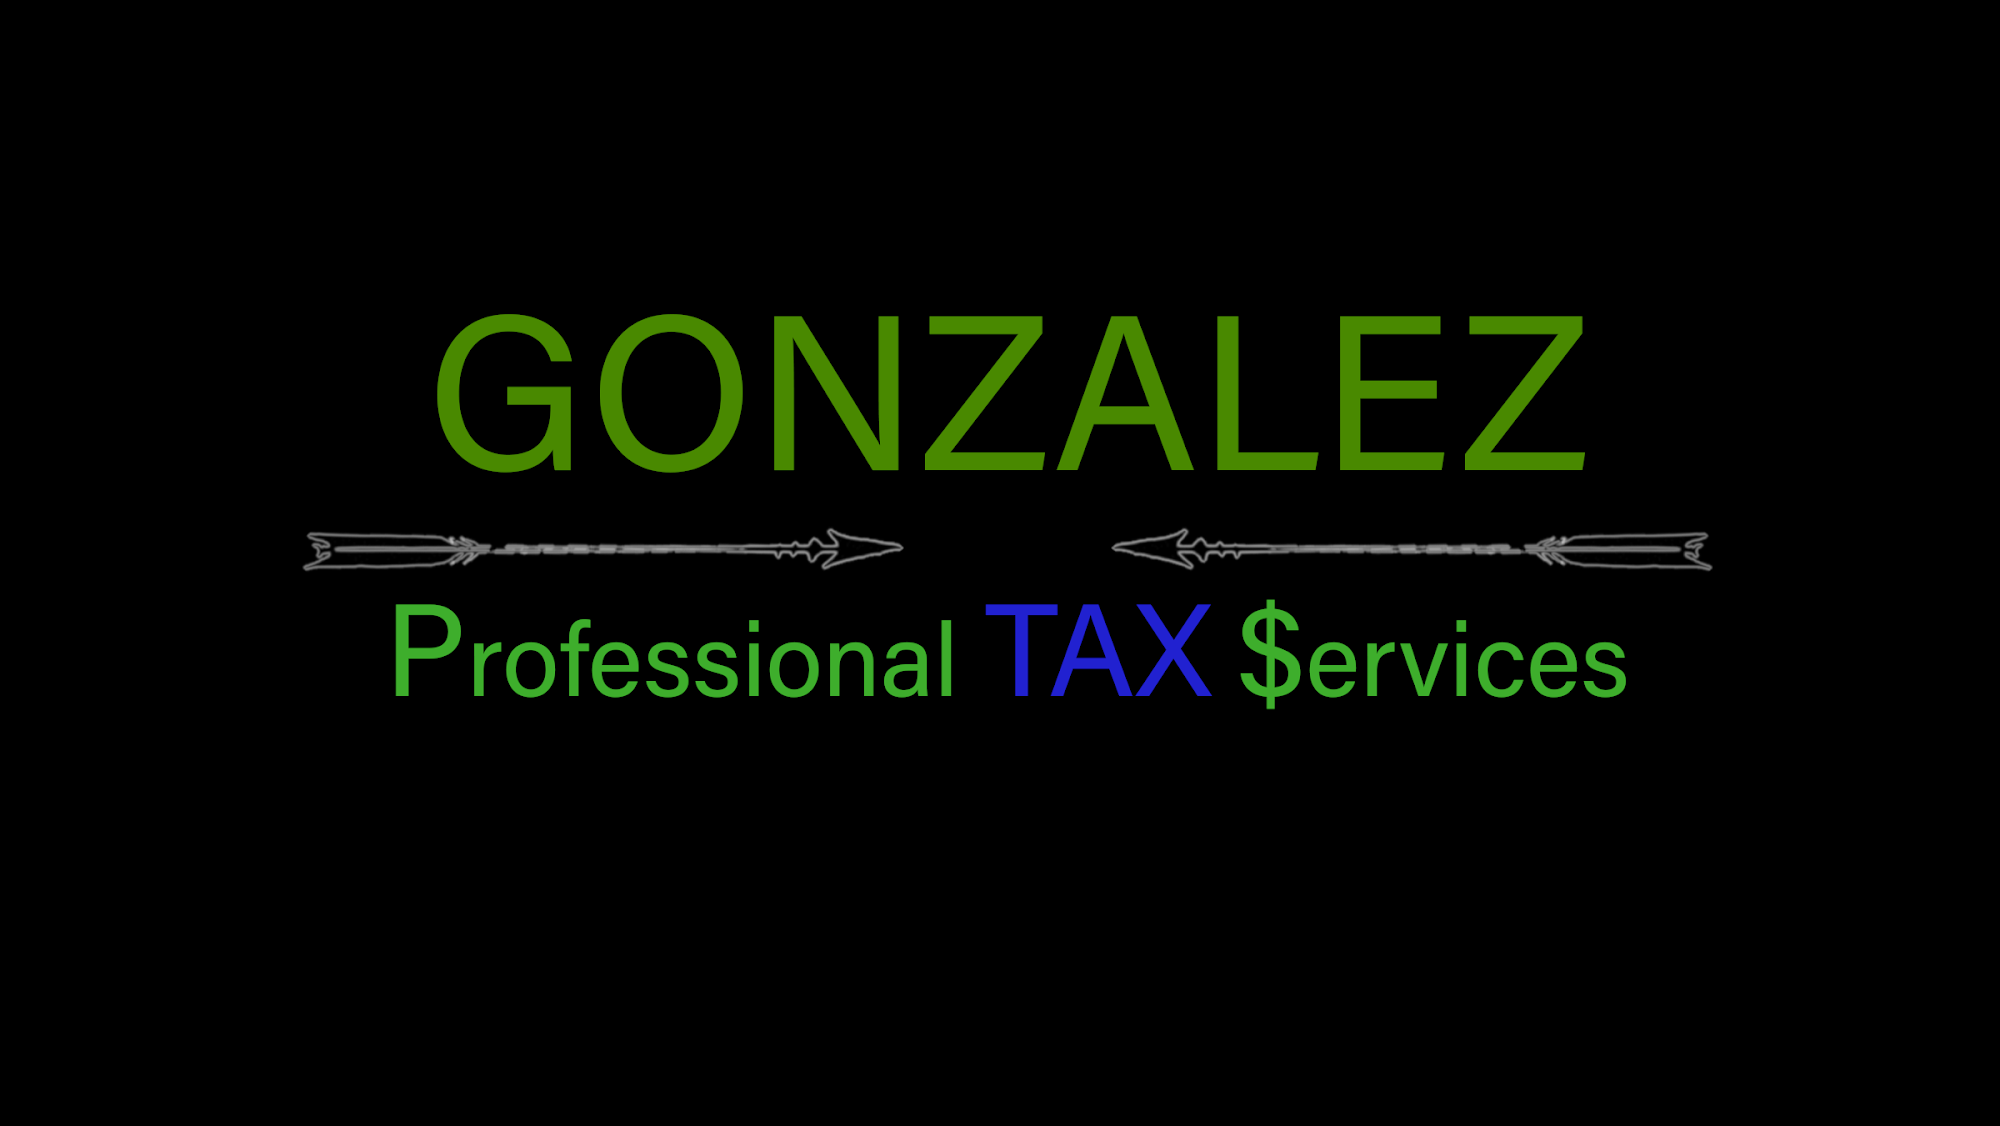 Gonzalez Professional Tax Services 1749 7th St, Mendota California 93640